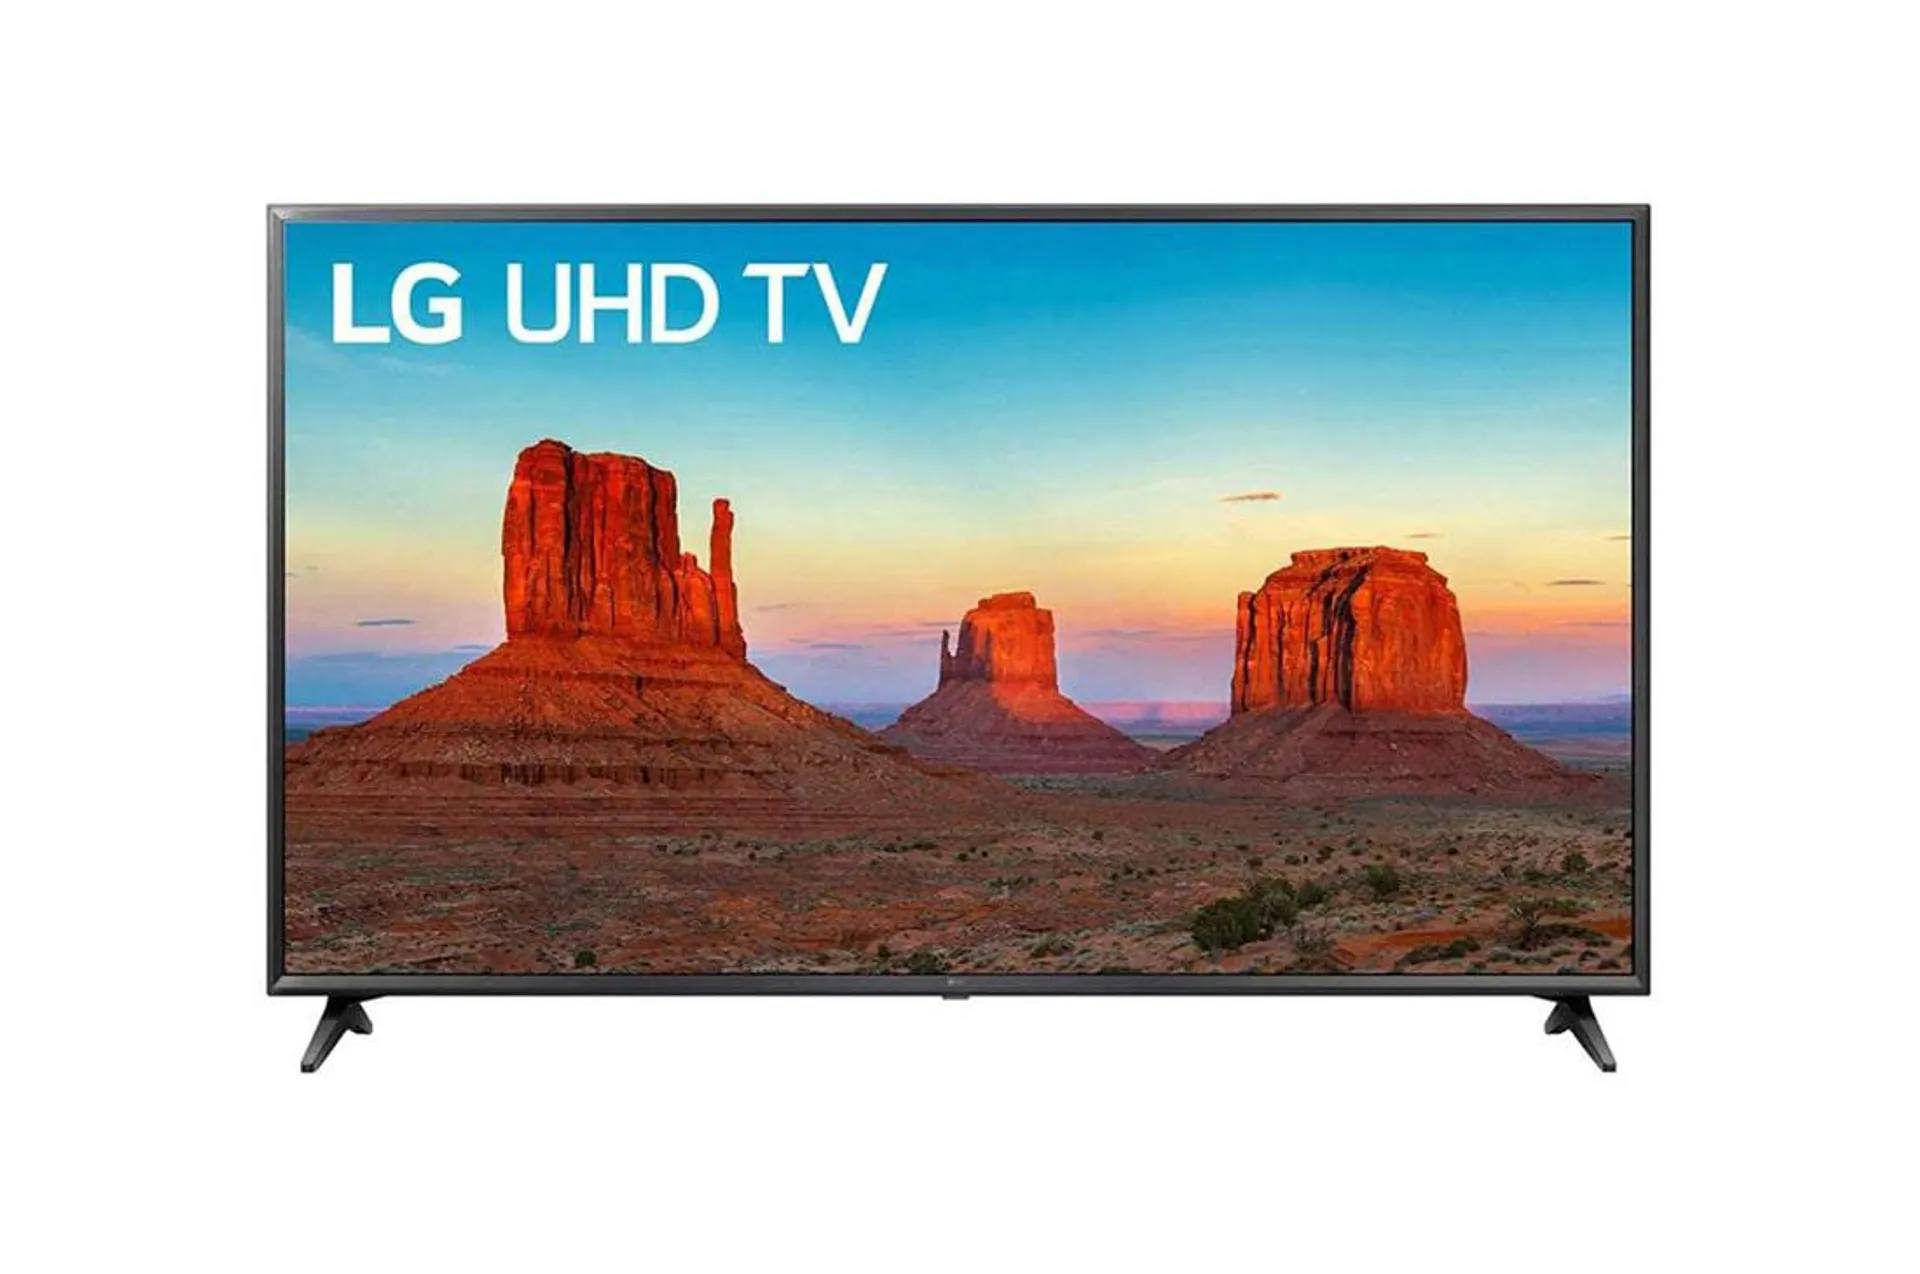 UK6090PUA 4K HDR Smart LED UHD TV - 55'' Class (54.6'' Diag)